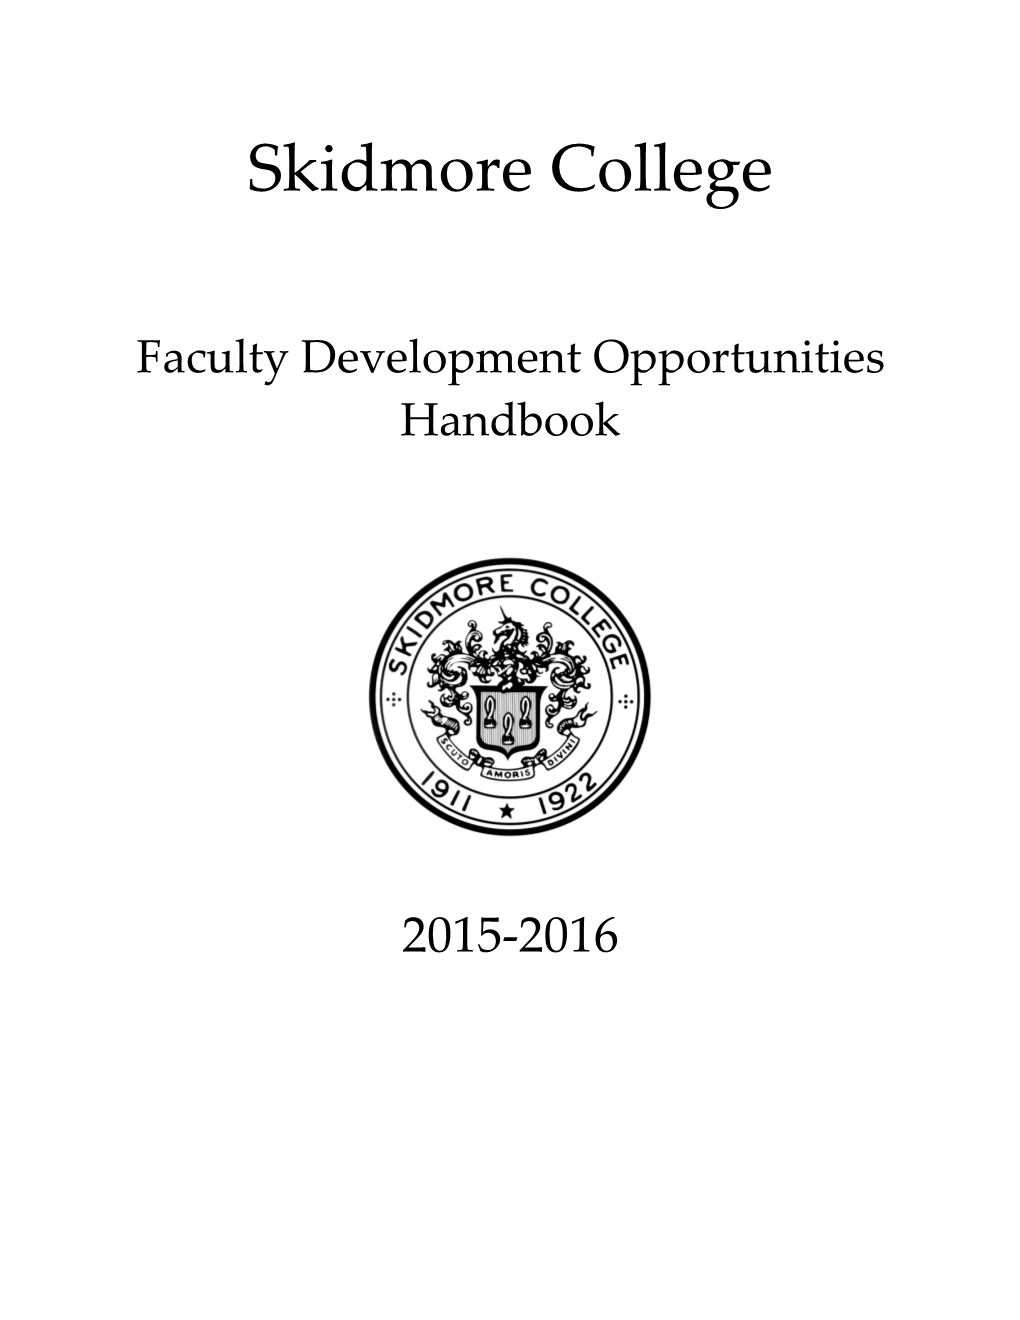 2015-2016 Faculty Development Opportunities Handbook